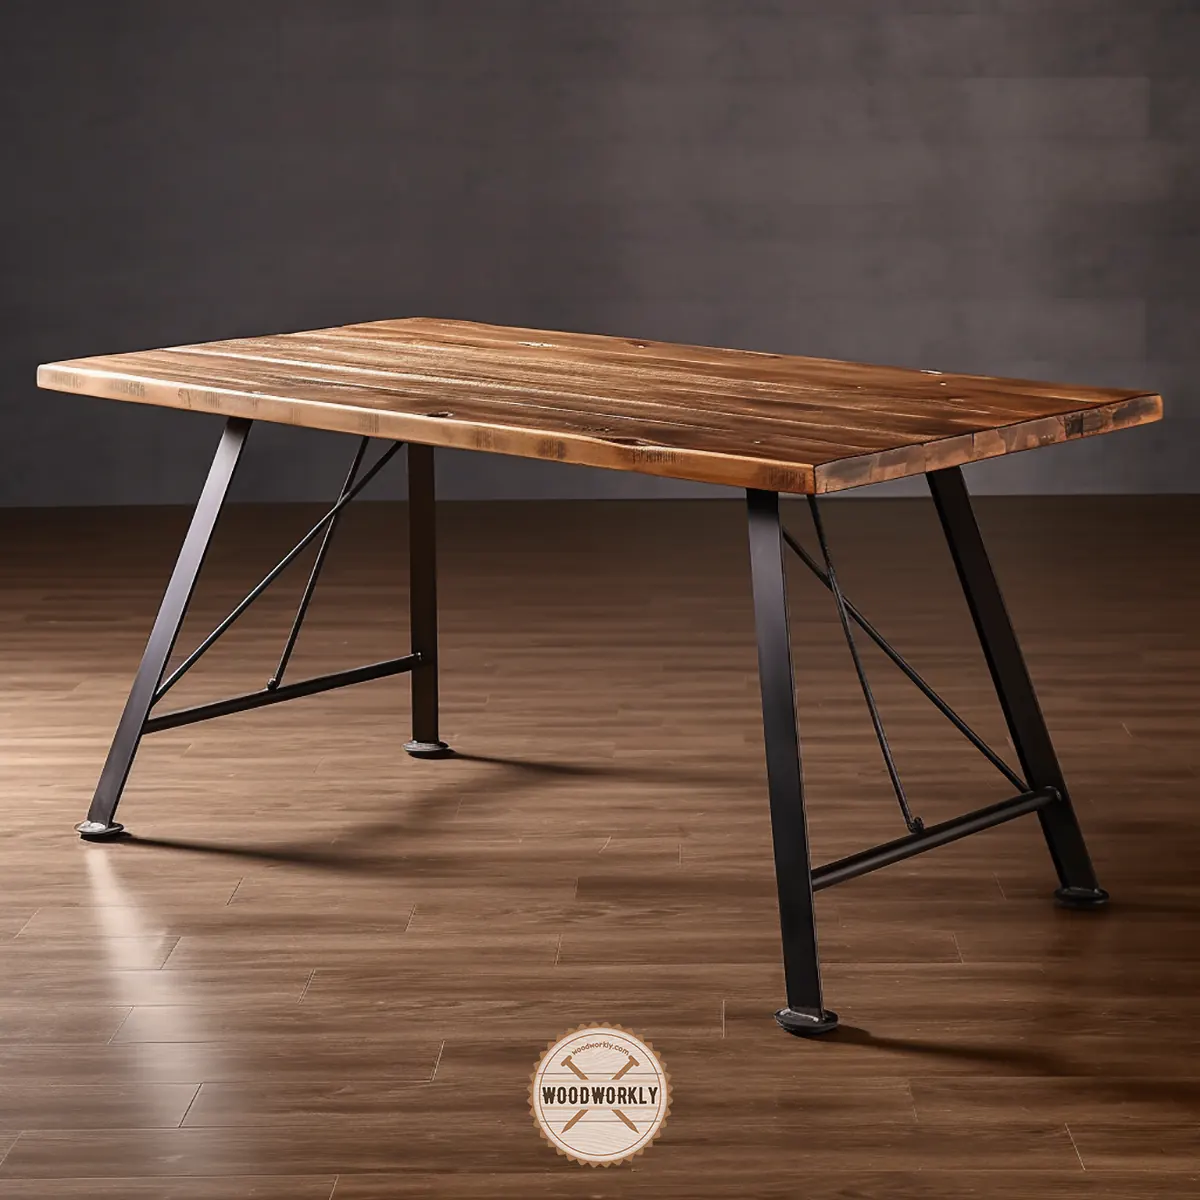 Poplar wood dining table